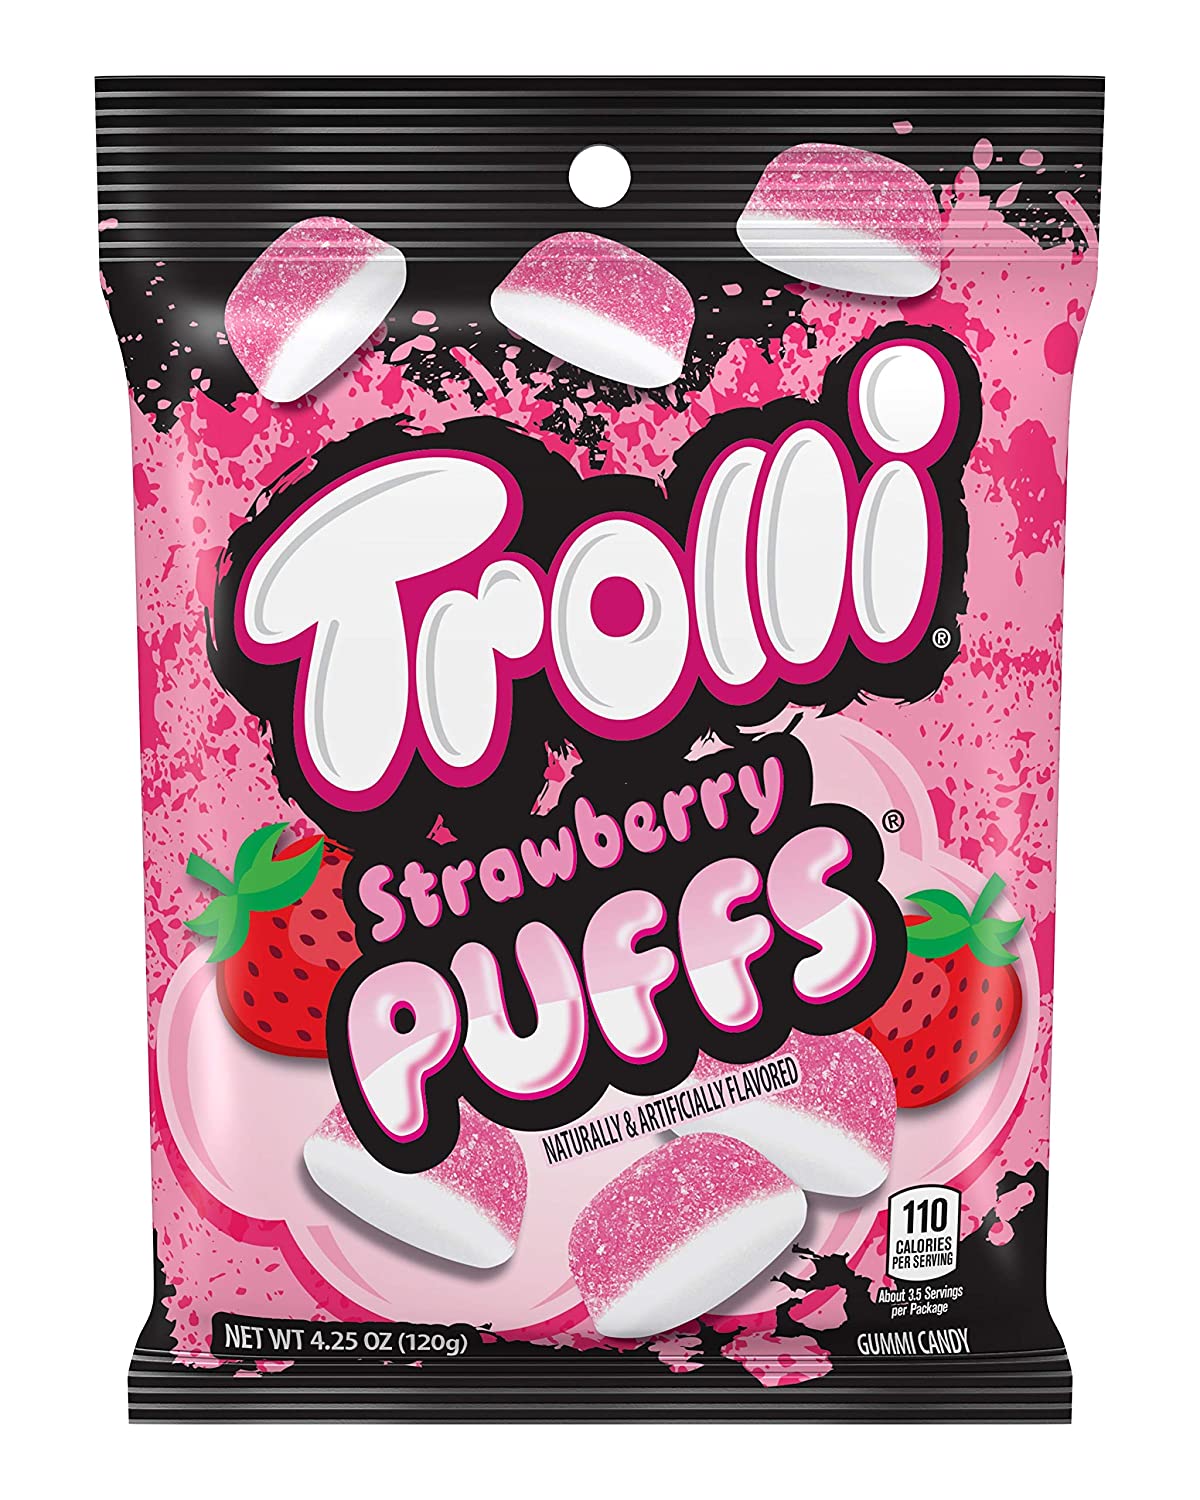 Trolli Strawberry Puffs-Exotic Pop